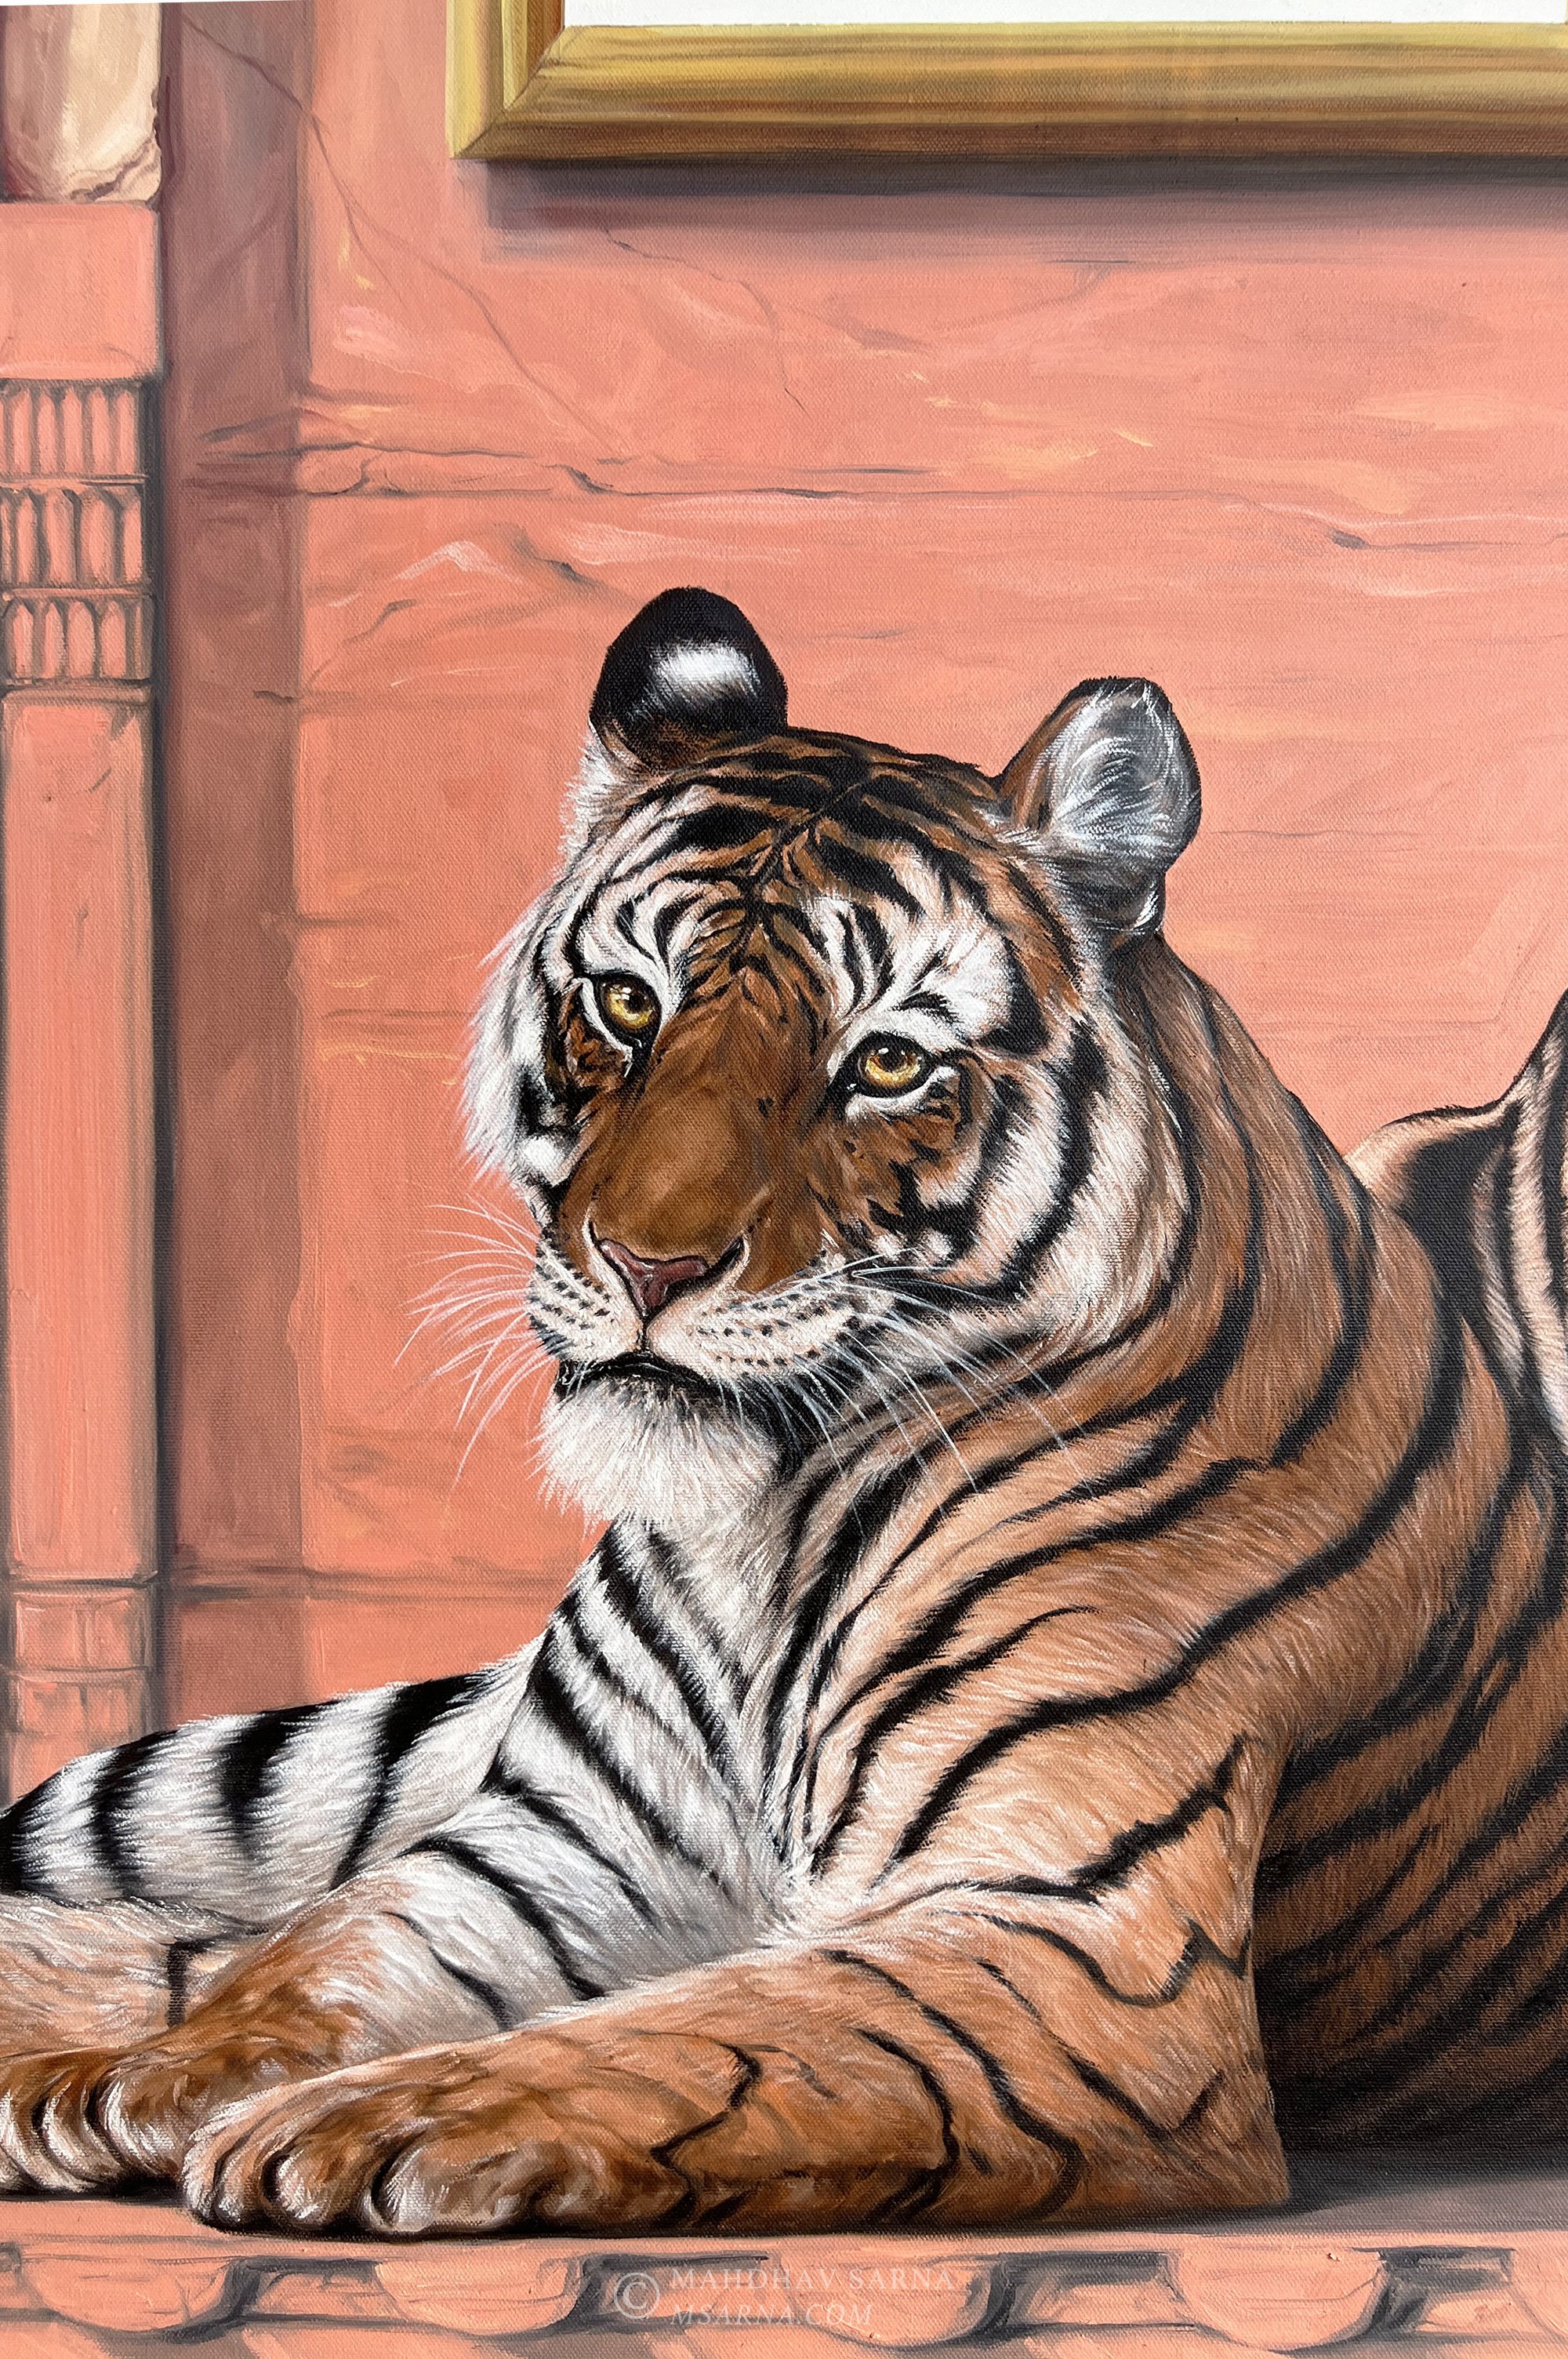 india bengal tiger oil painting royl wildlife art mahdhav sarna 02.jpg